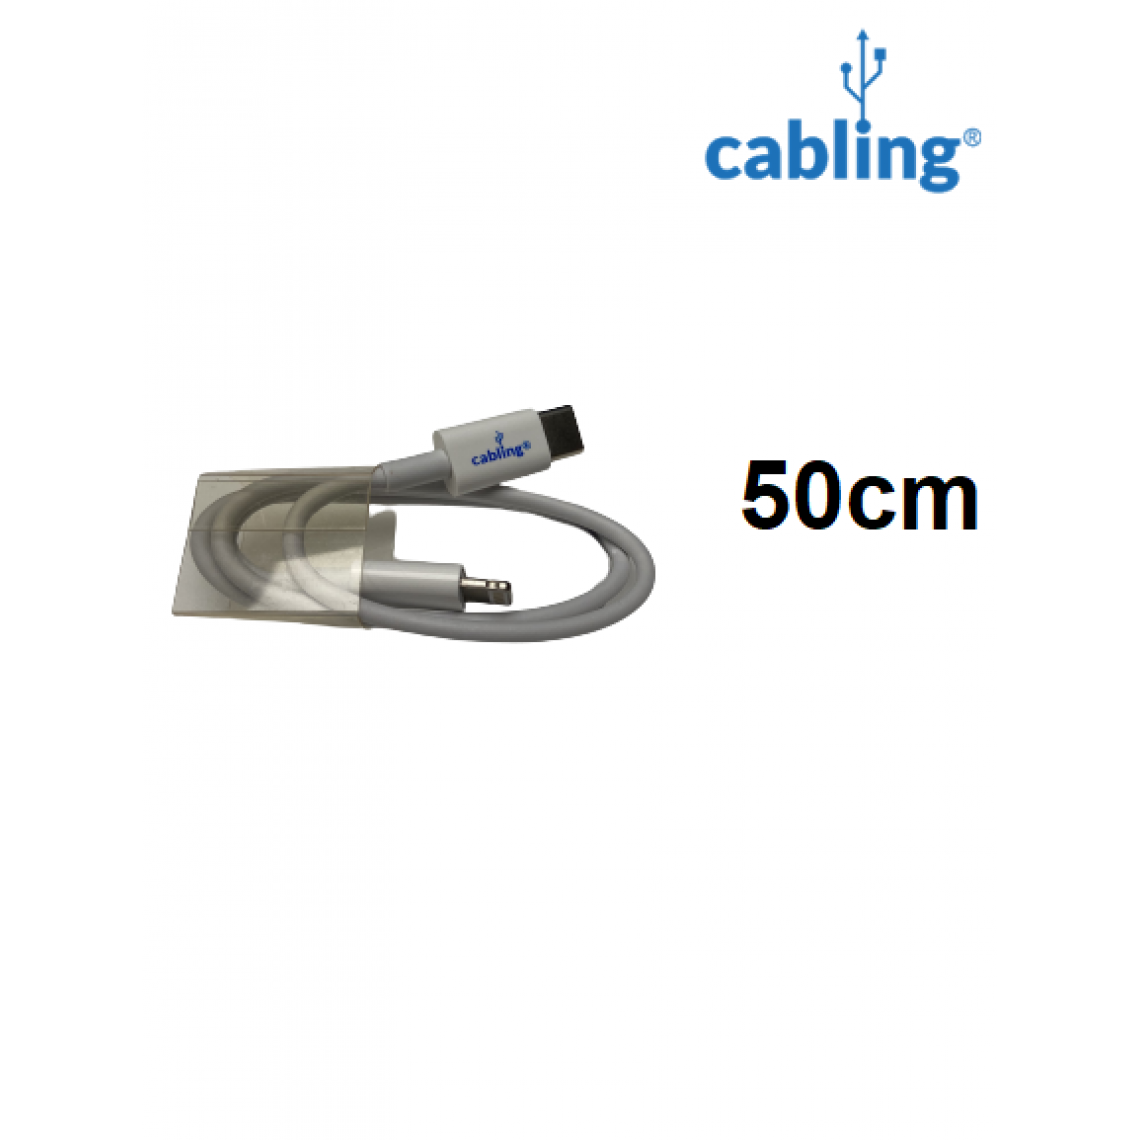 Cabling - CABLING® Câble USB C vers Lightning , Câble USB C Lightning Charge Rapide compatible pour iPhone 12/11/11 Pro/XS/XR/X/8, iPad Mini 5, iPad Air 2019-0,5m/Blanc - Chargeur secteur téléphone